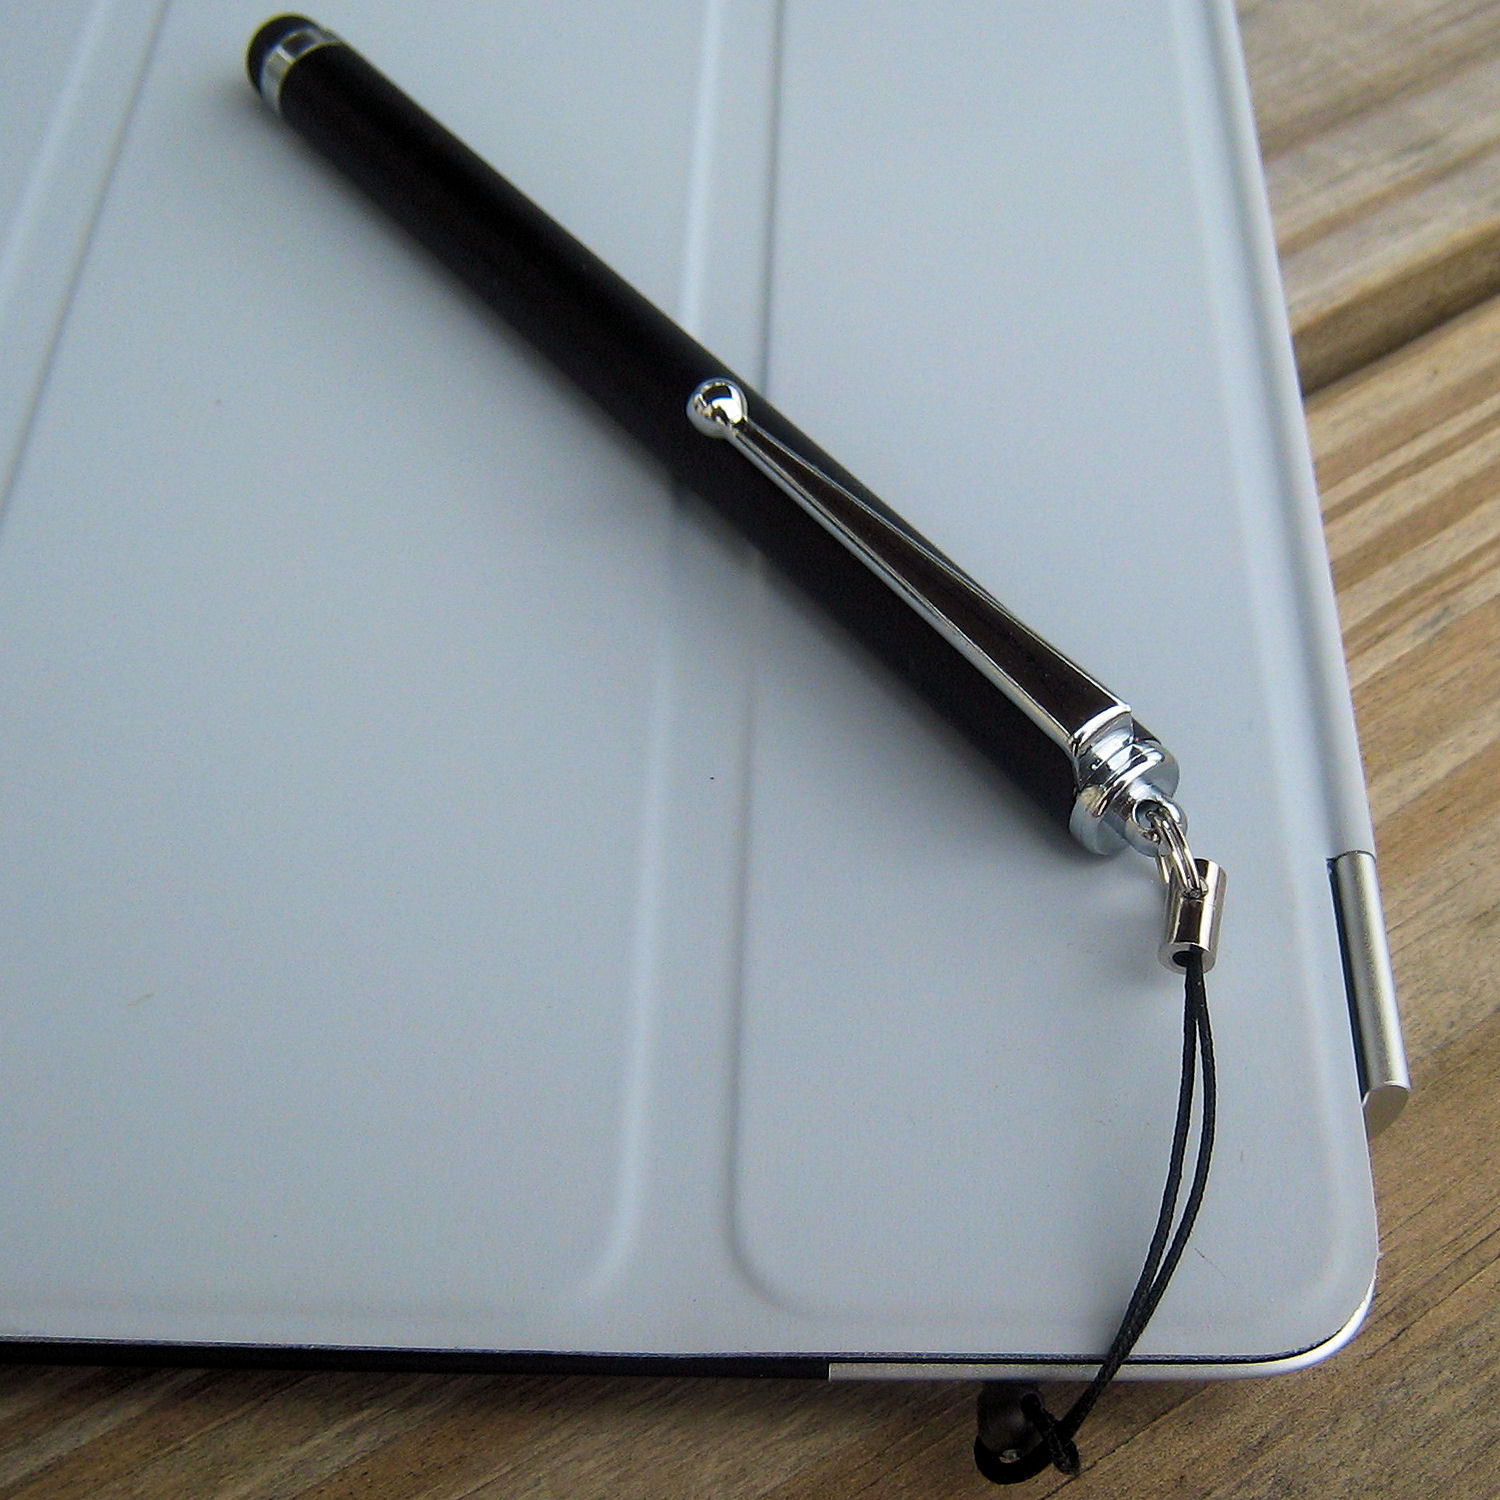 Gomadic Precision Tip Capacitive Stylus Pen designed for the Le Pan TC1020 (Black Color) - Lifetime Warranty